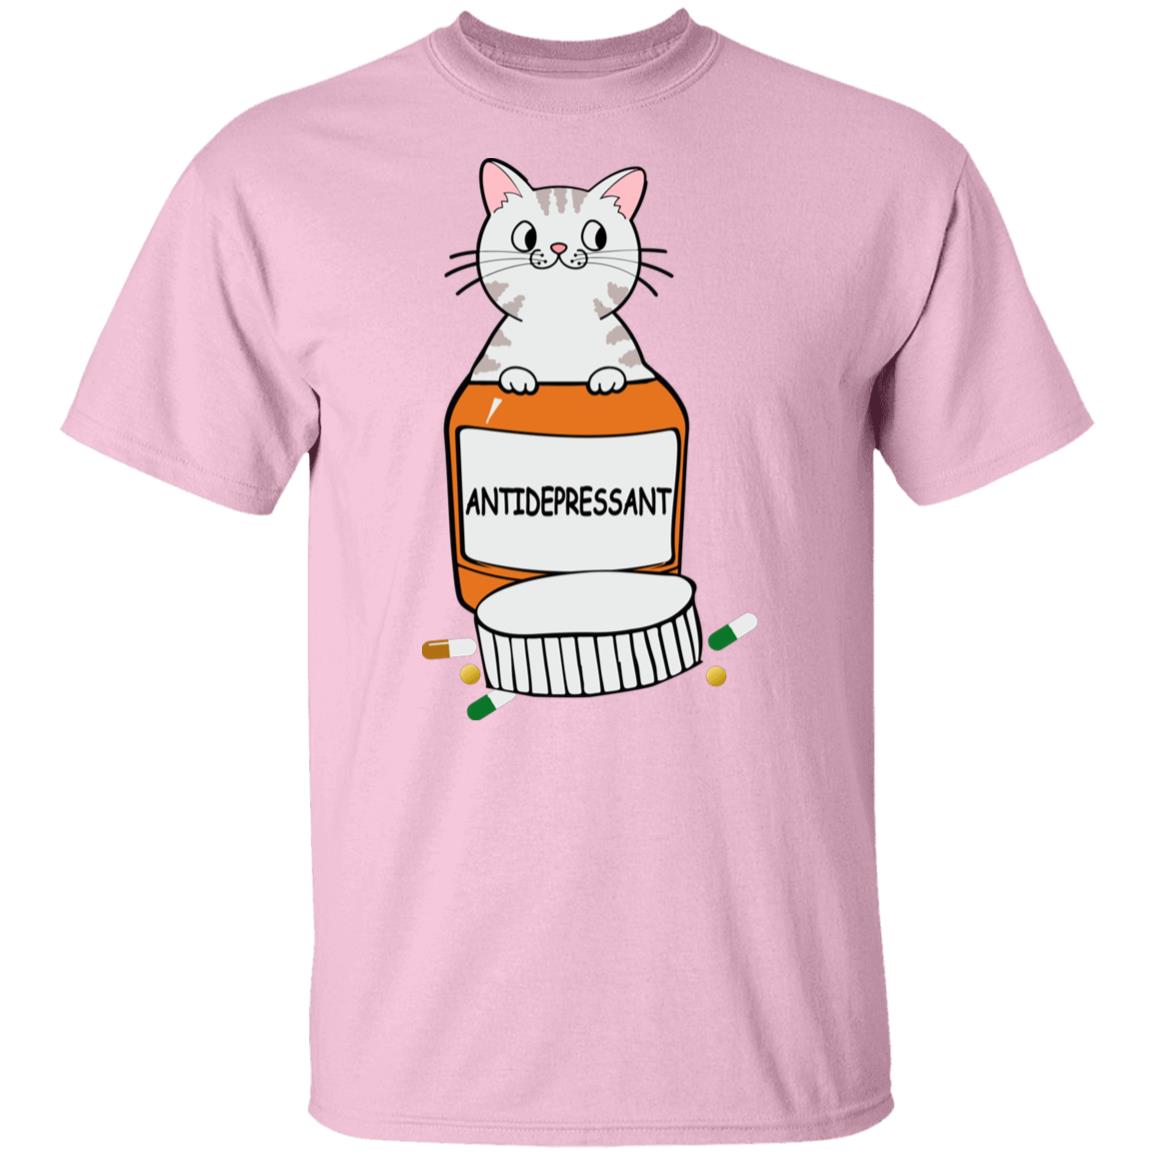 Anti-depressant cat tshirt